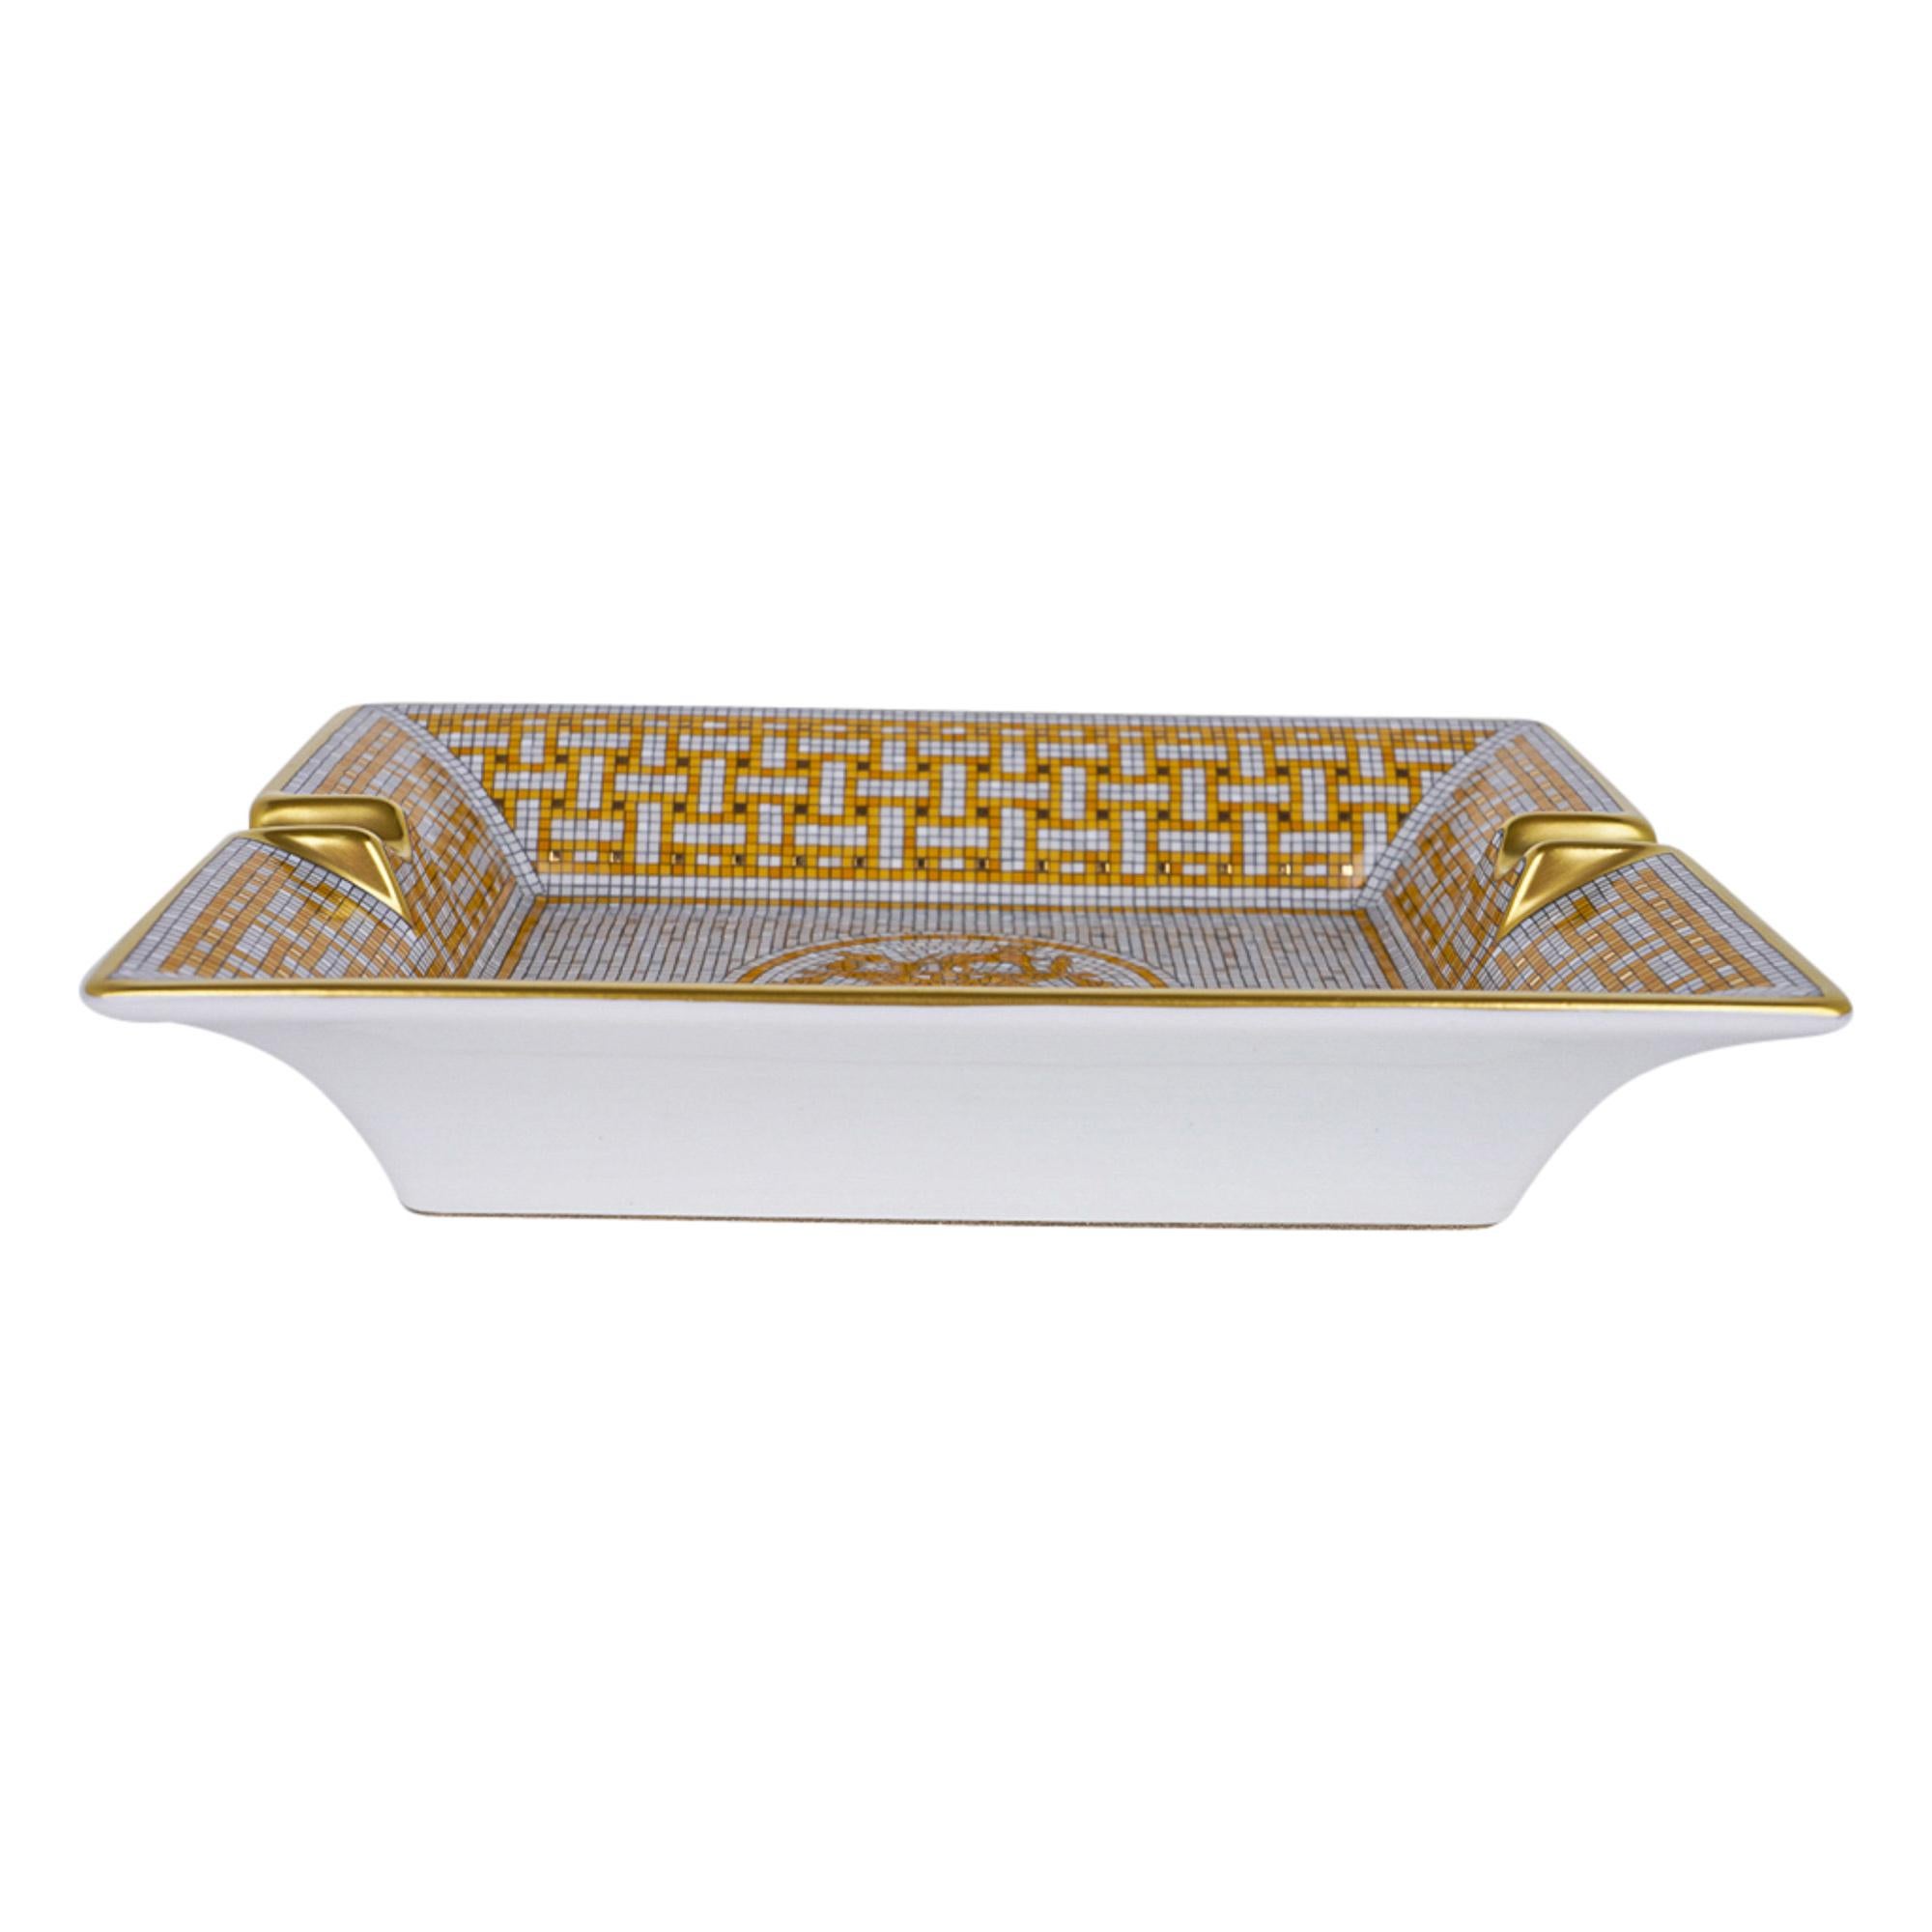 Hermes Mosaique Au 24 Gold Ashtray Limoges Porcelain Tray New w/Box 1